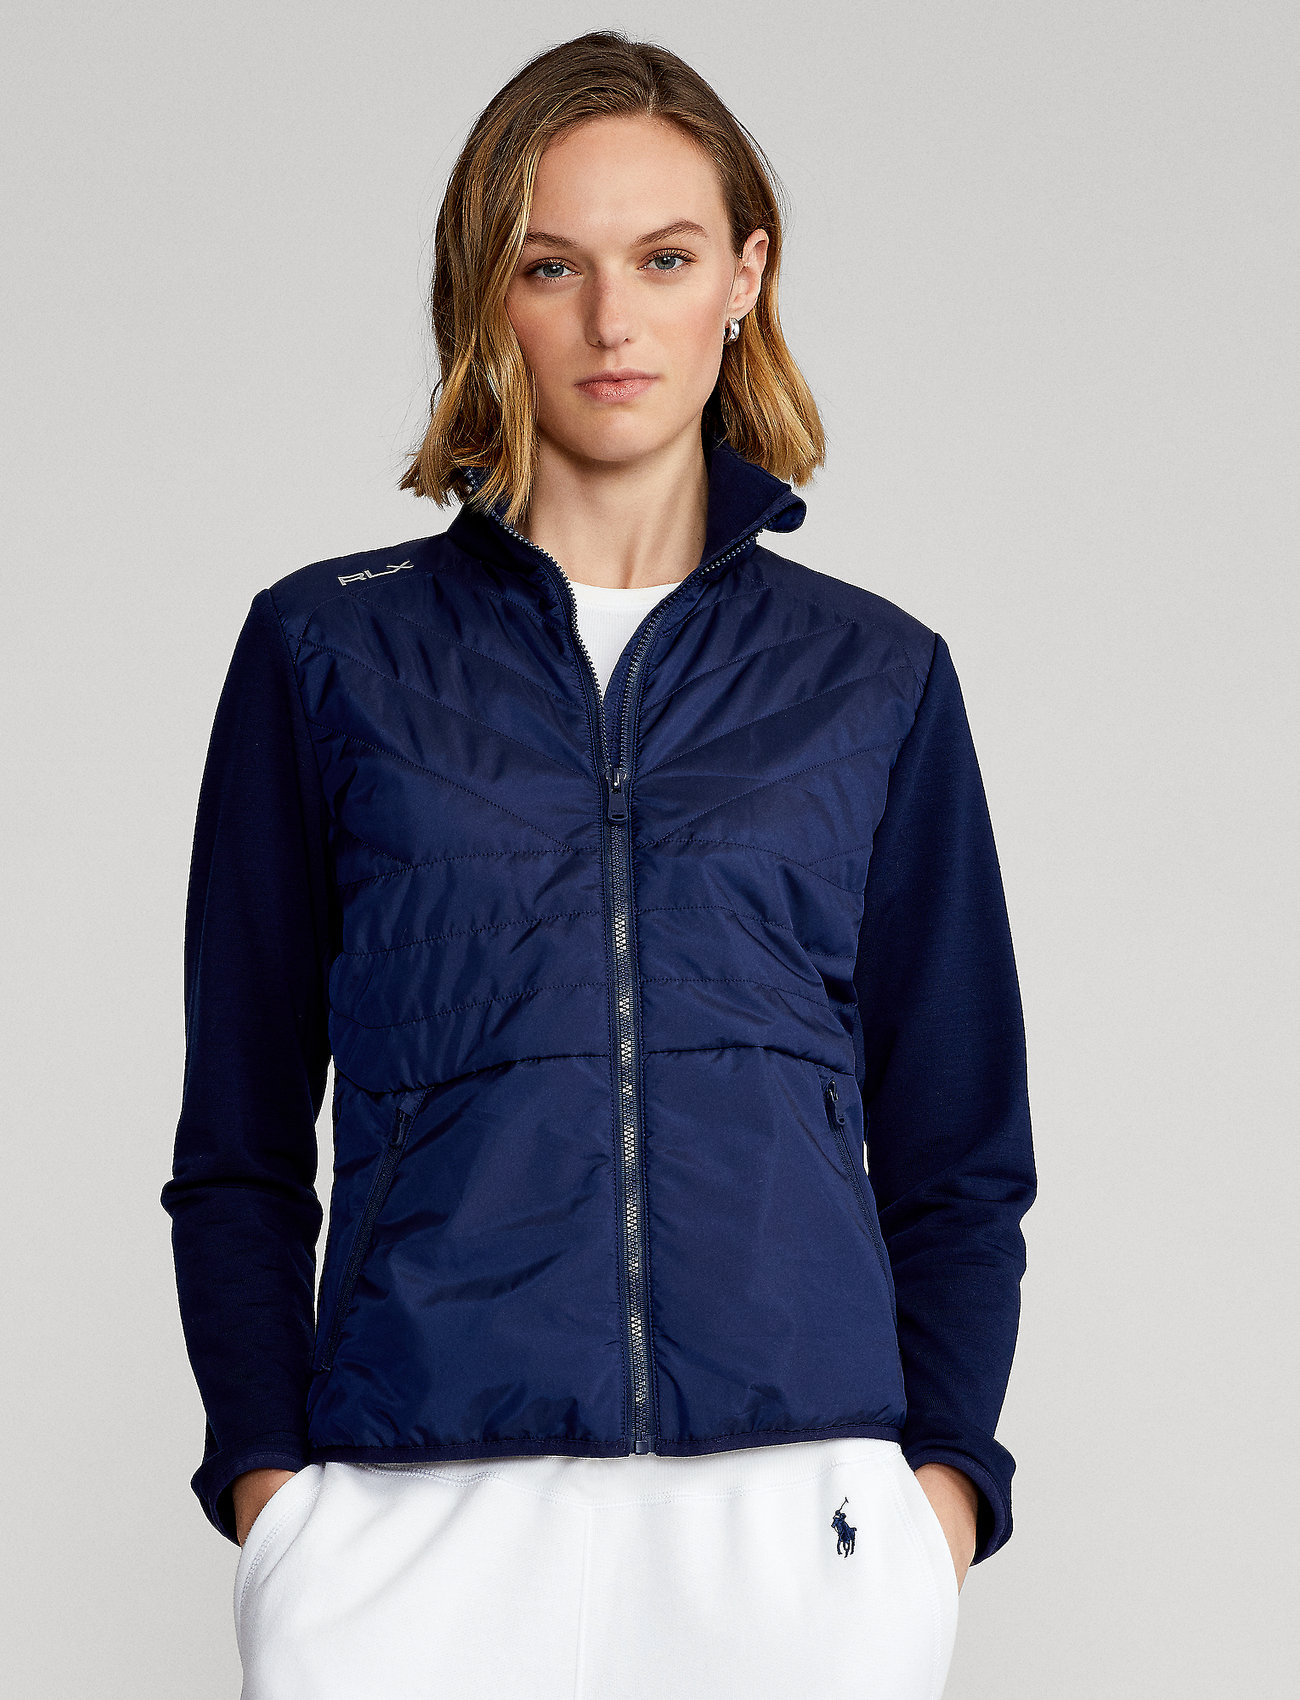 Ralph Lauren Golf Hybrid Full-zip Jacket - Jackets 